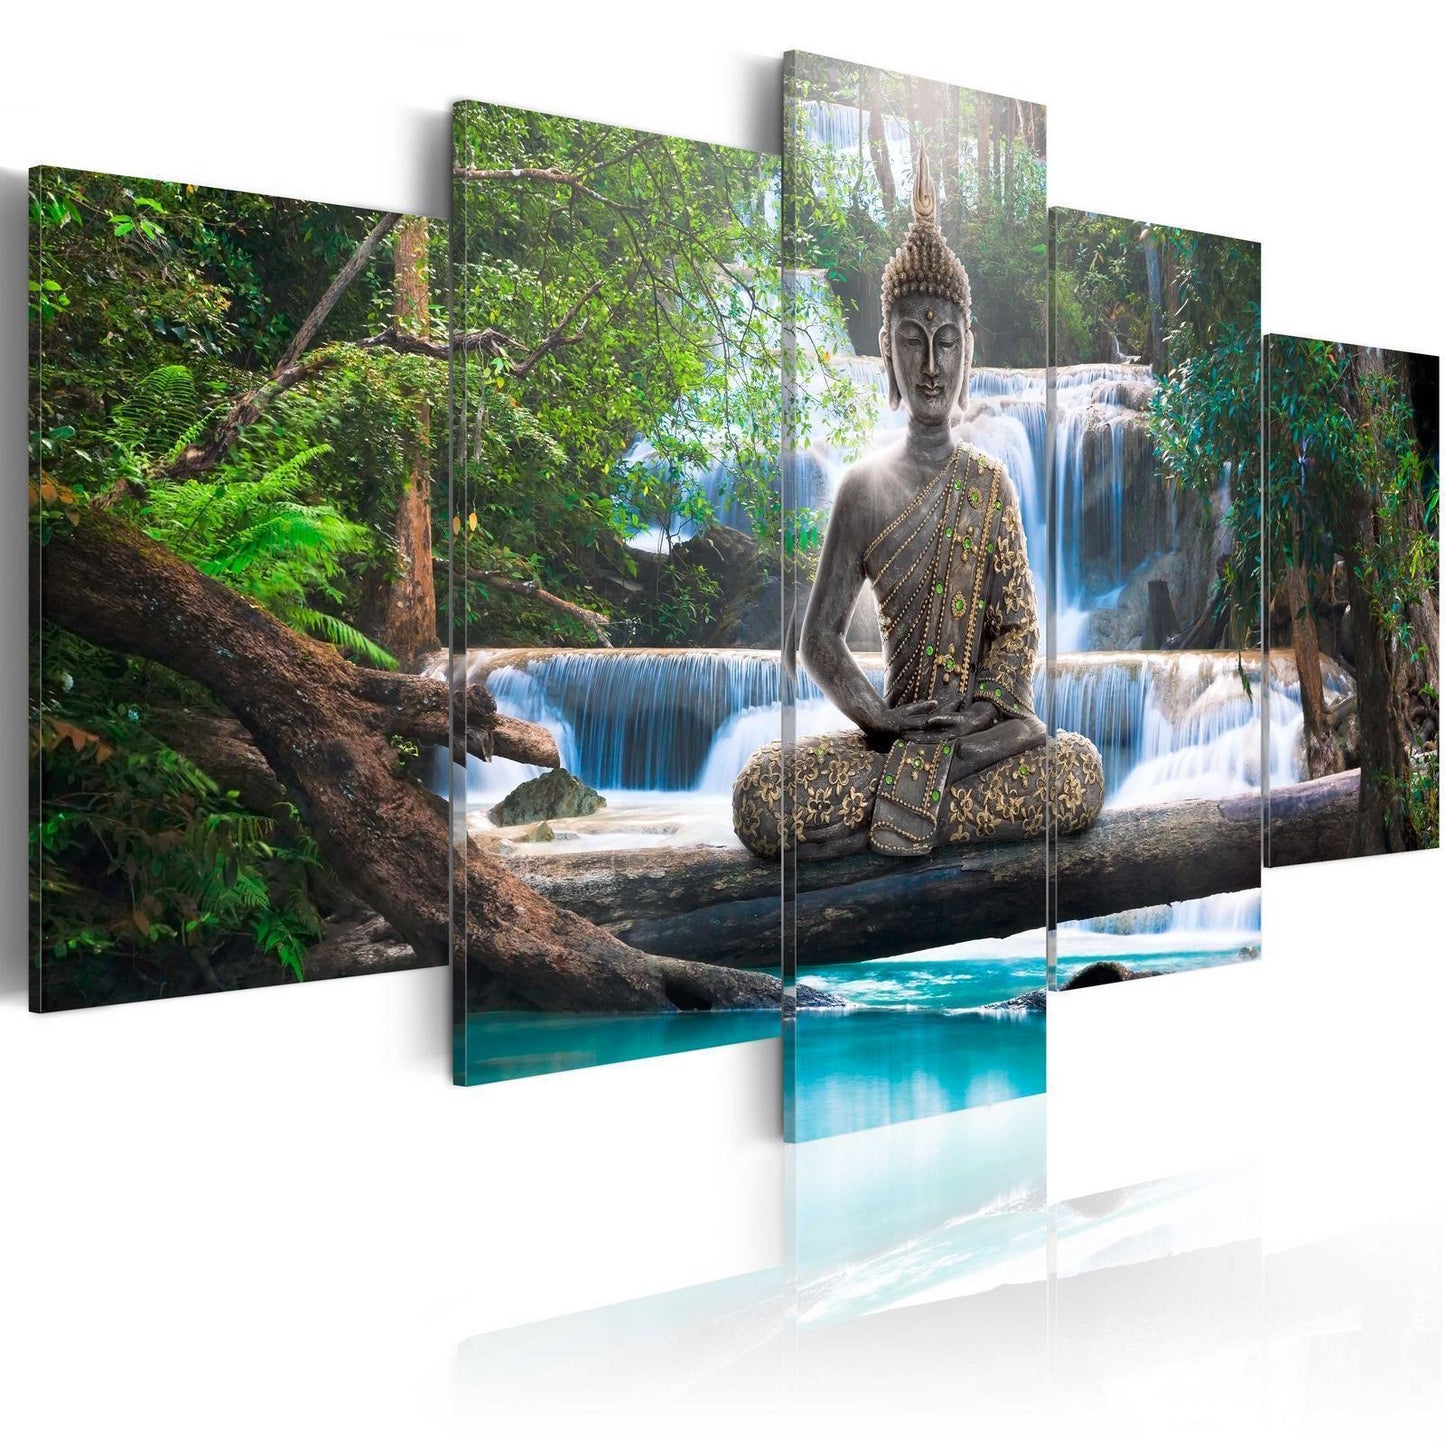 Painting - Buddha and waterfall